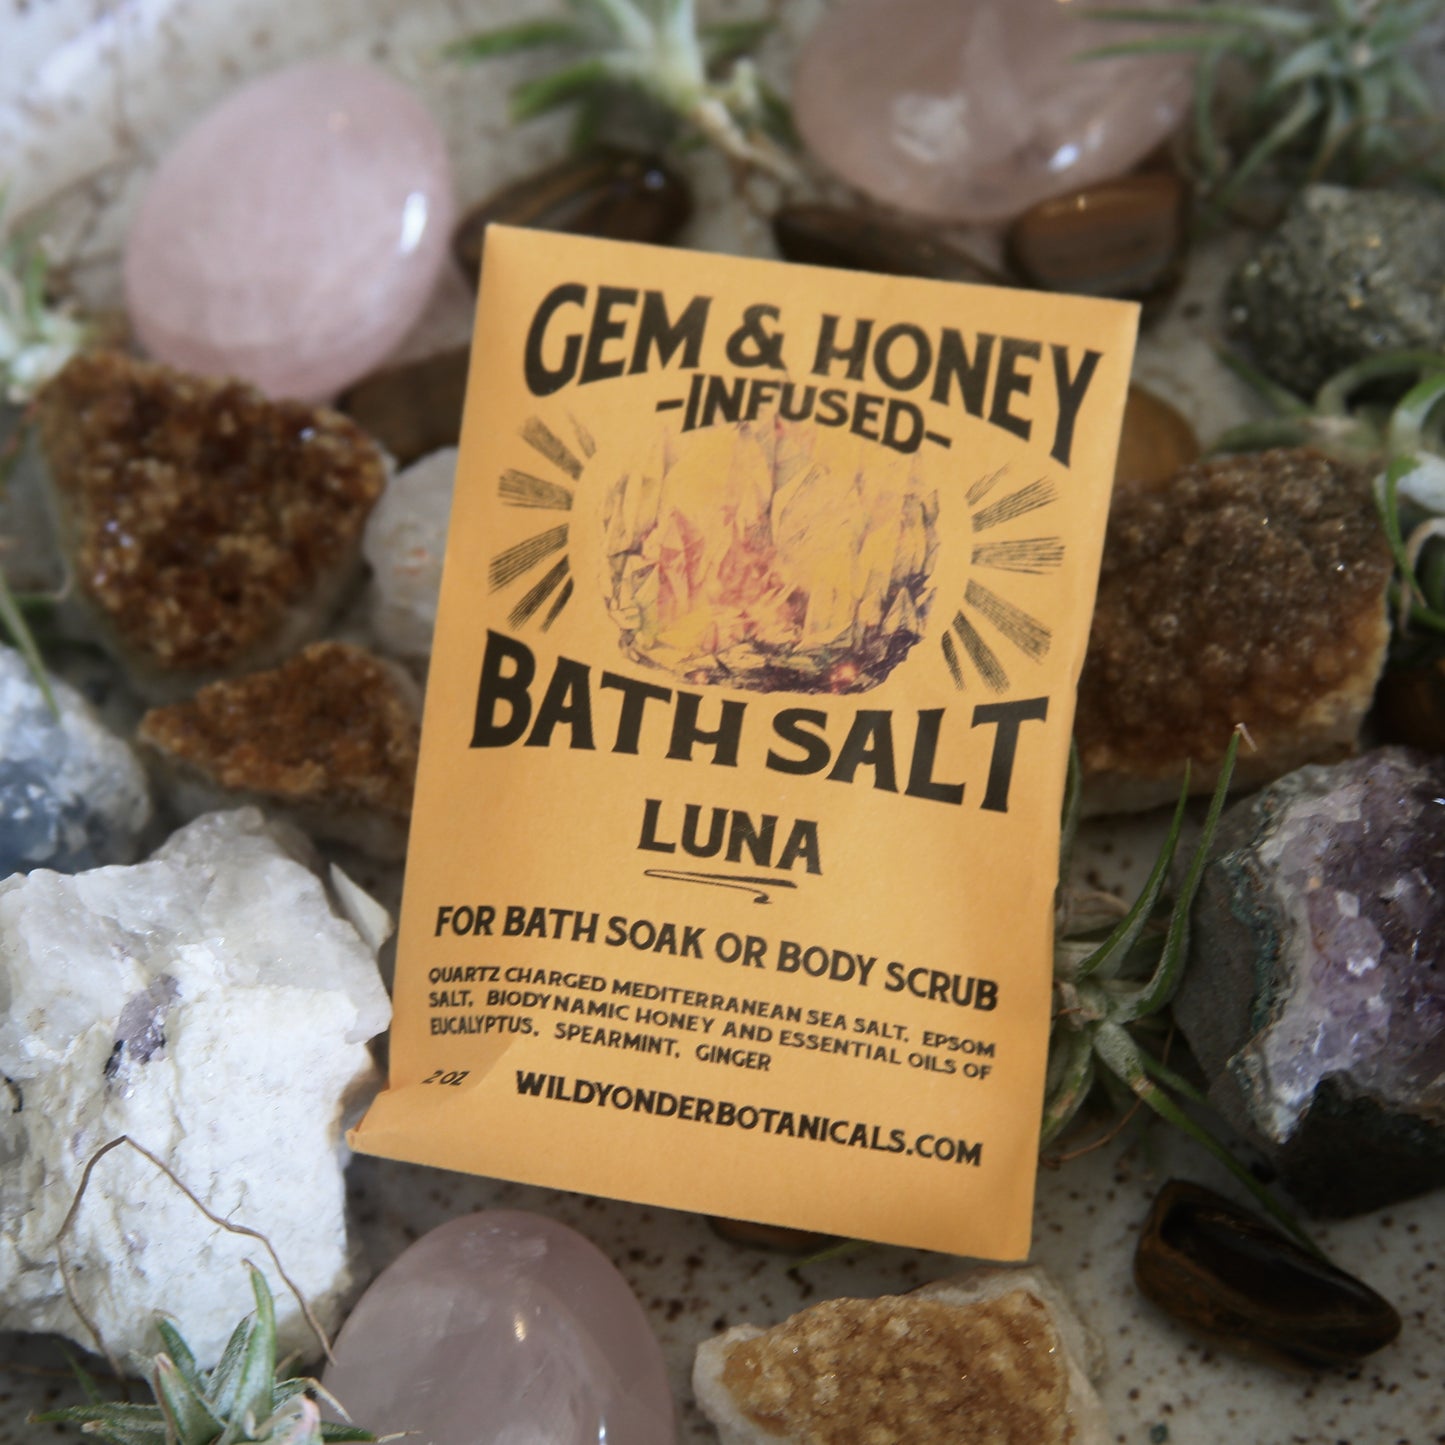 Wild Honey Botanicals Gem & Honey Bath Salt Packet